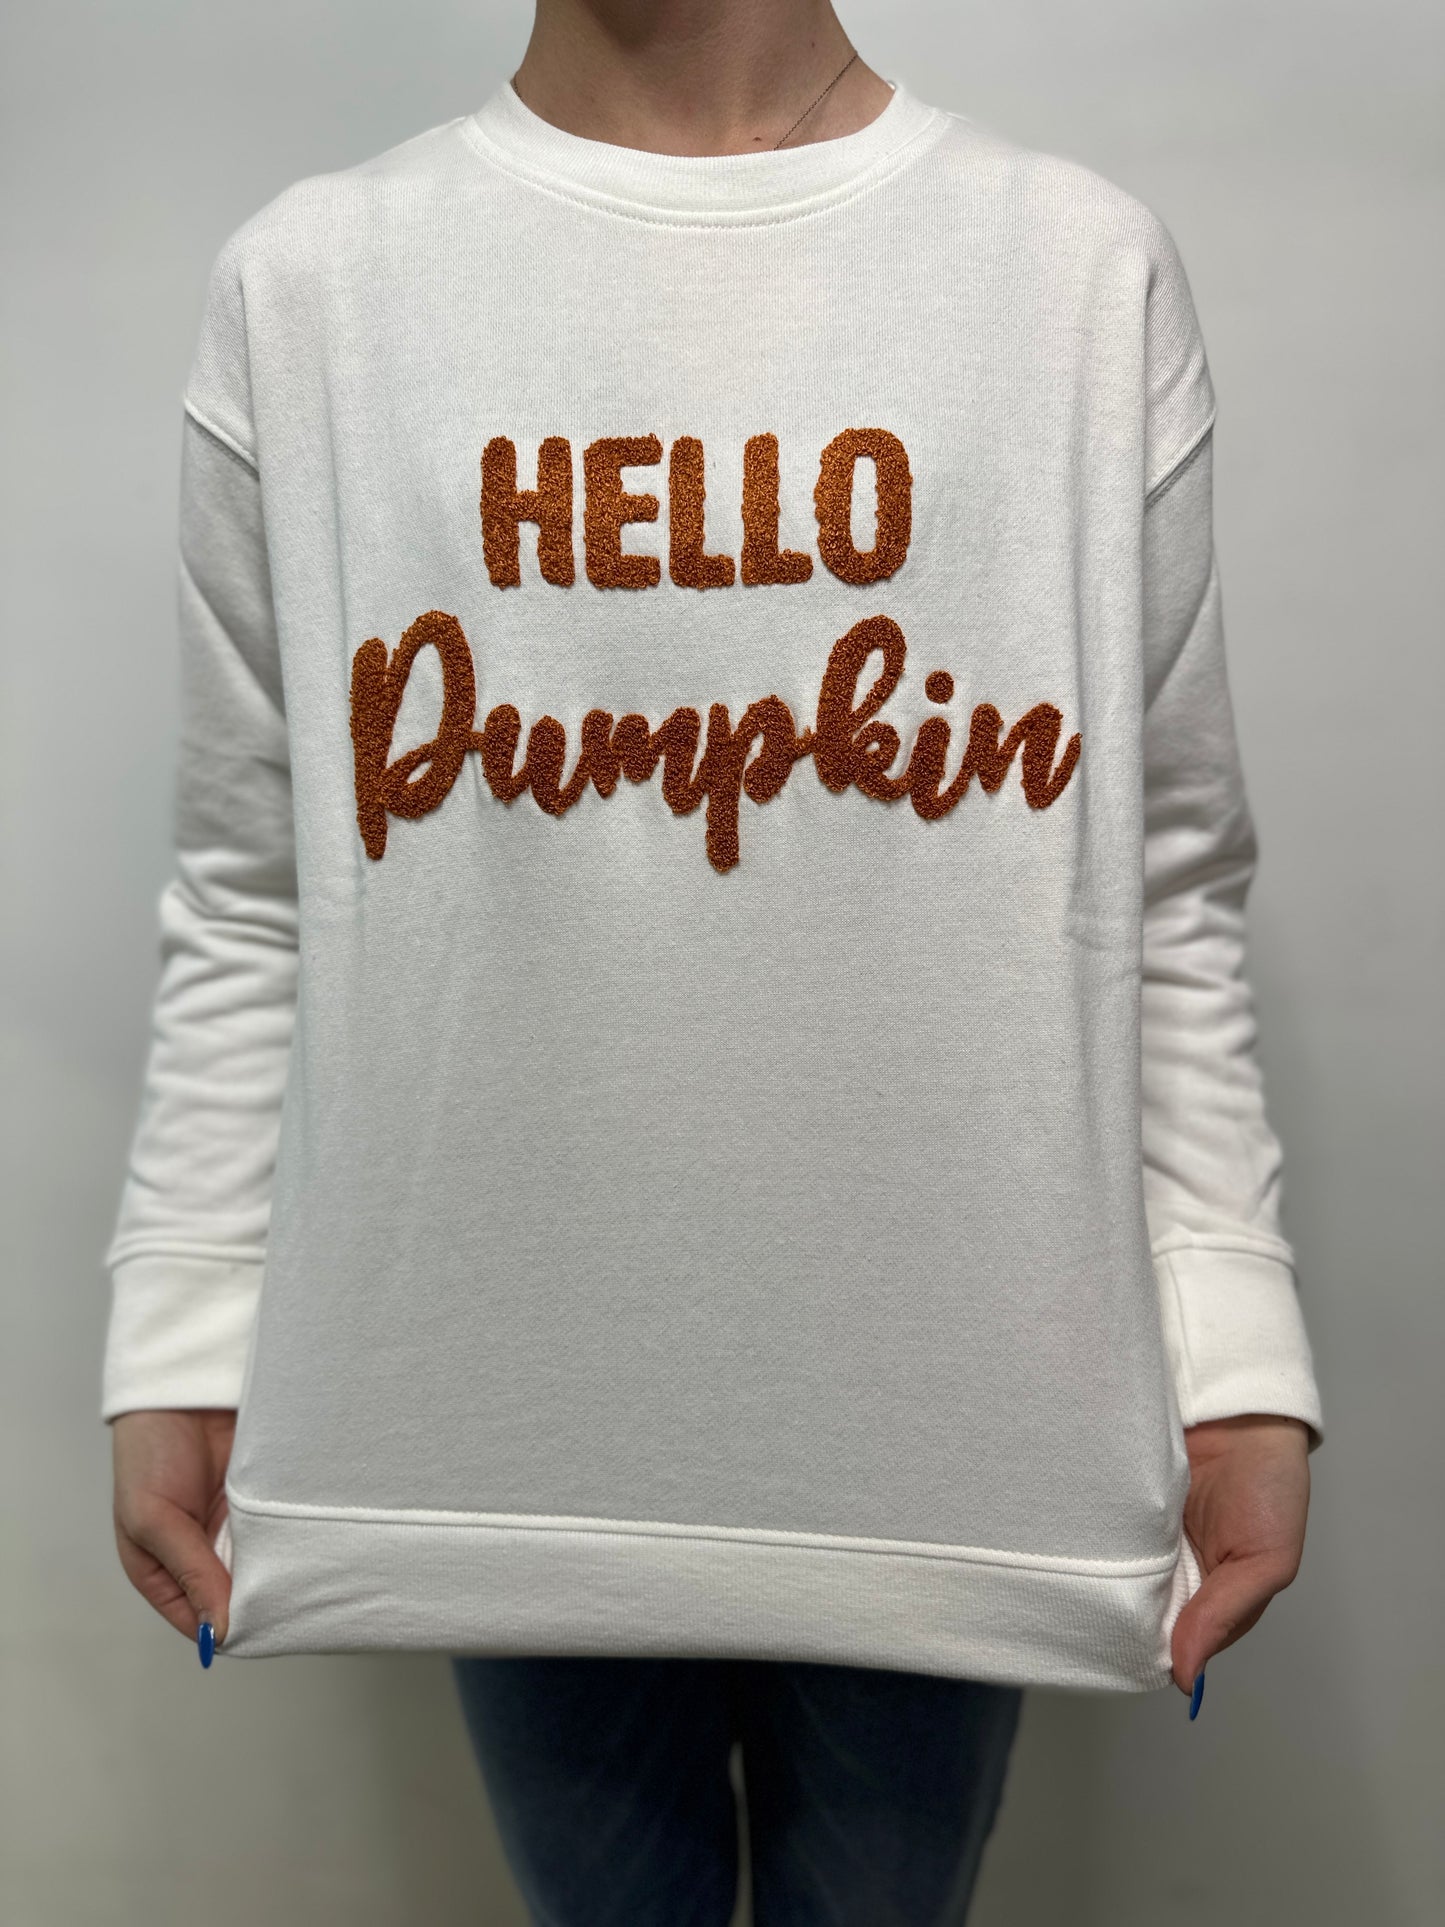 Hello Pumpkin Sweatshirt